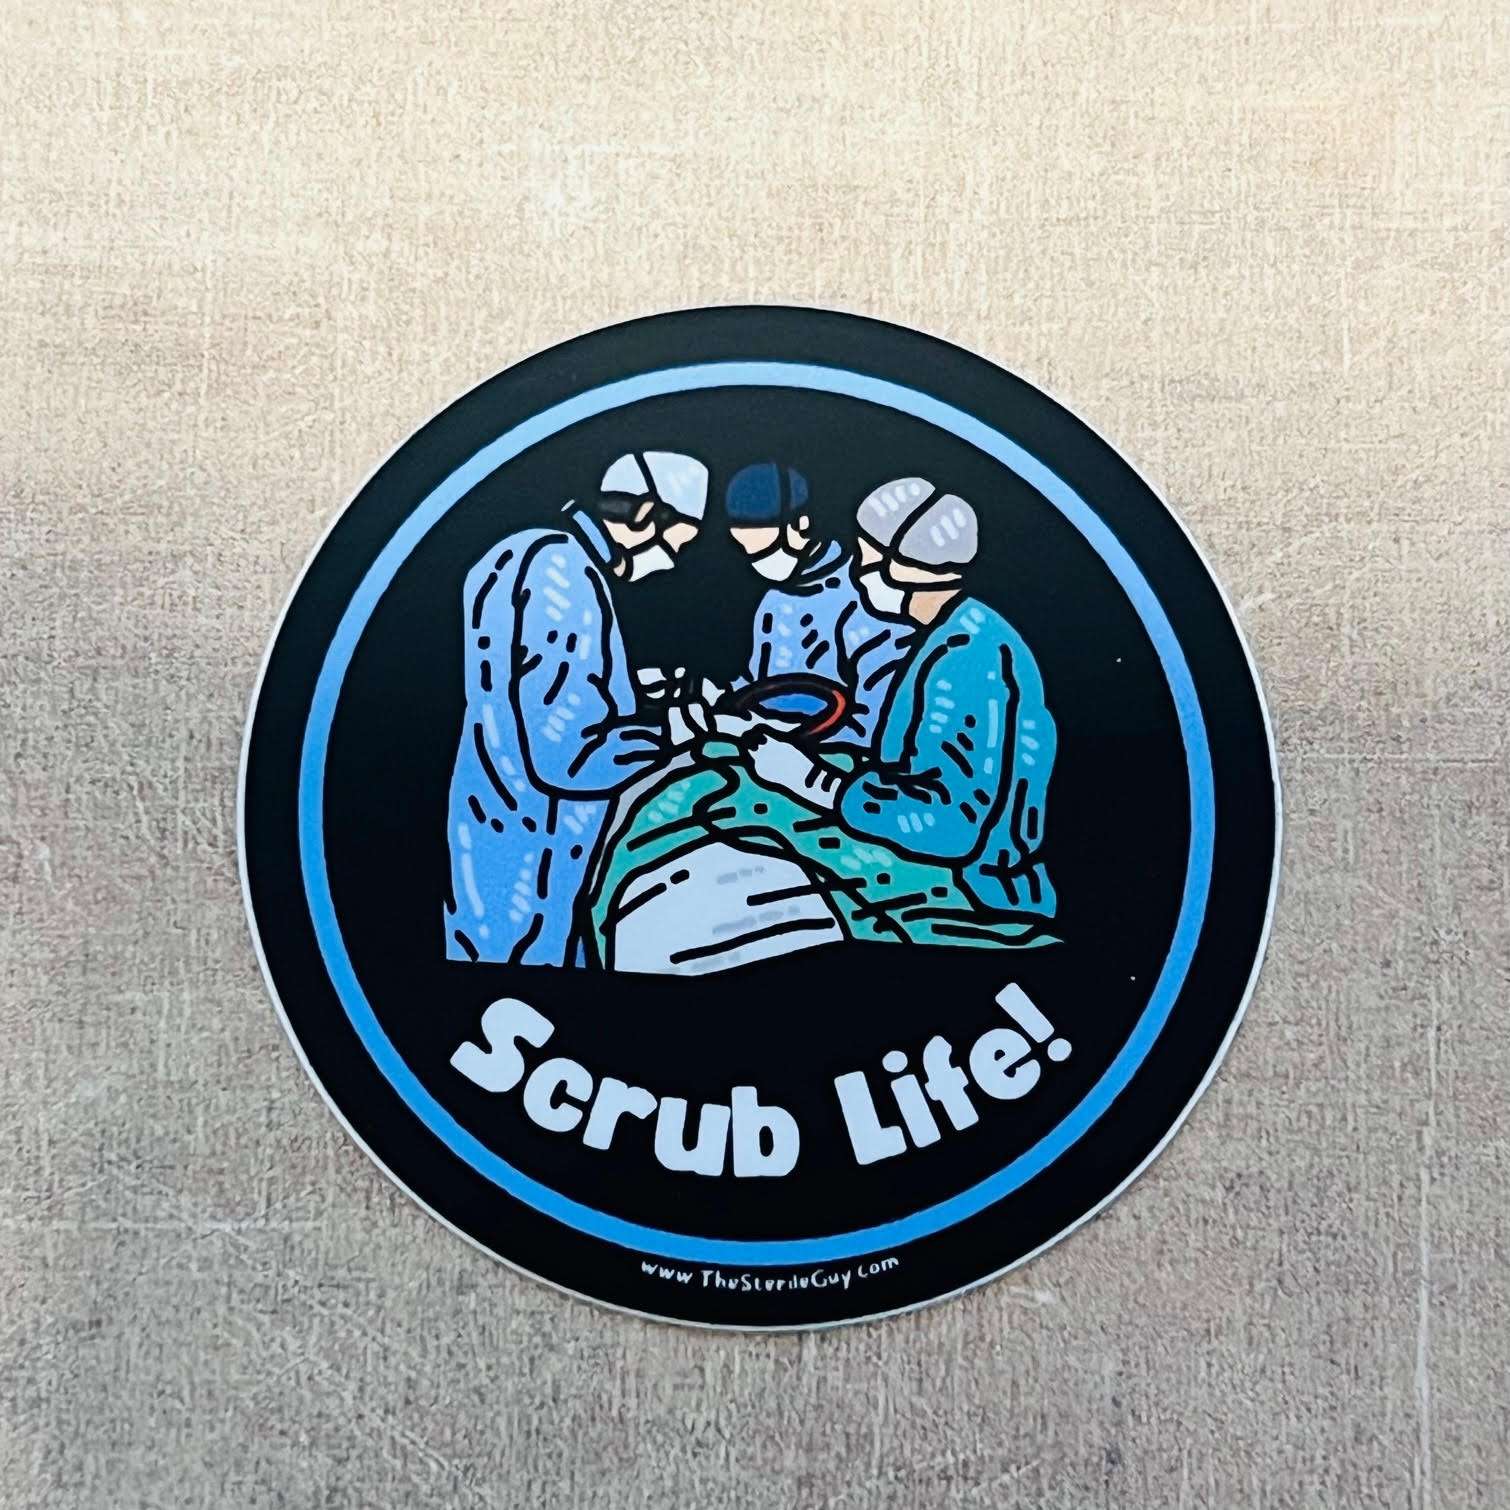 Scrub Life Sticker - The Sterile Guy LLC